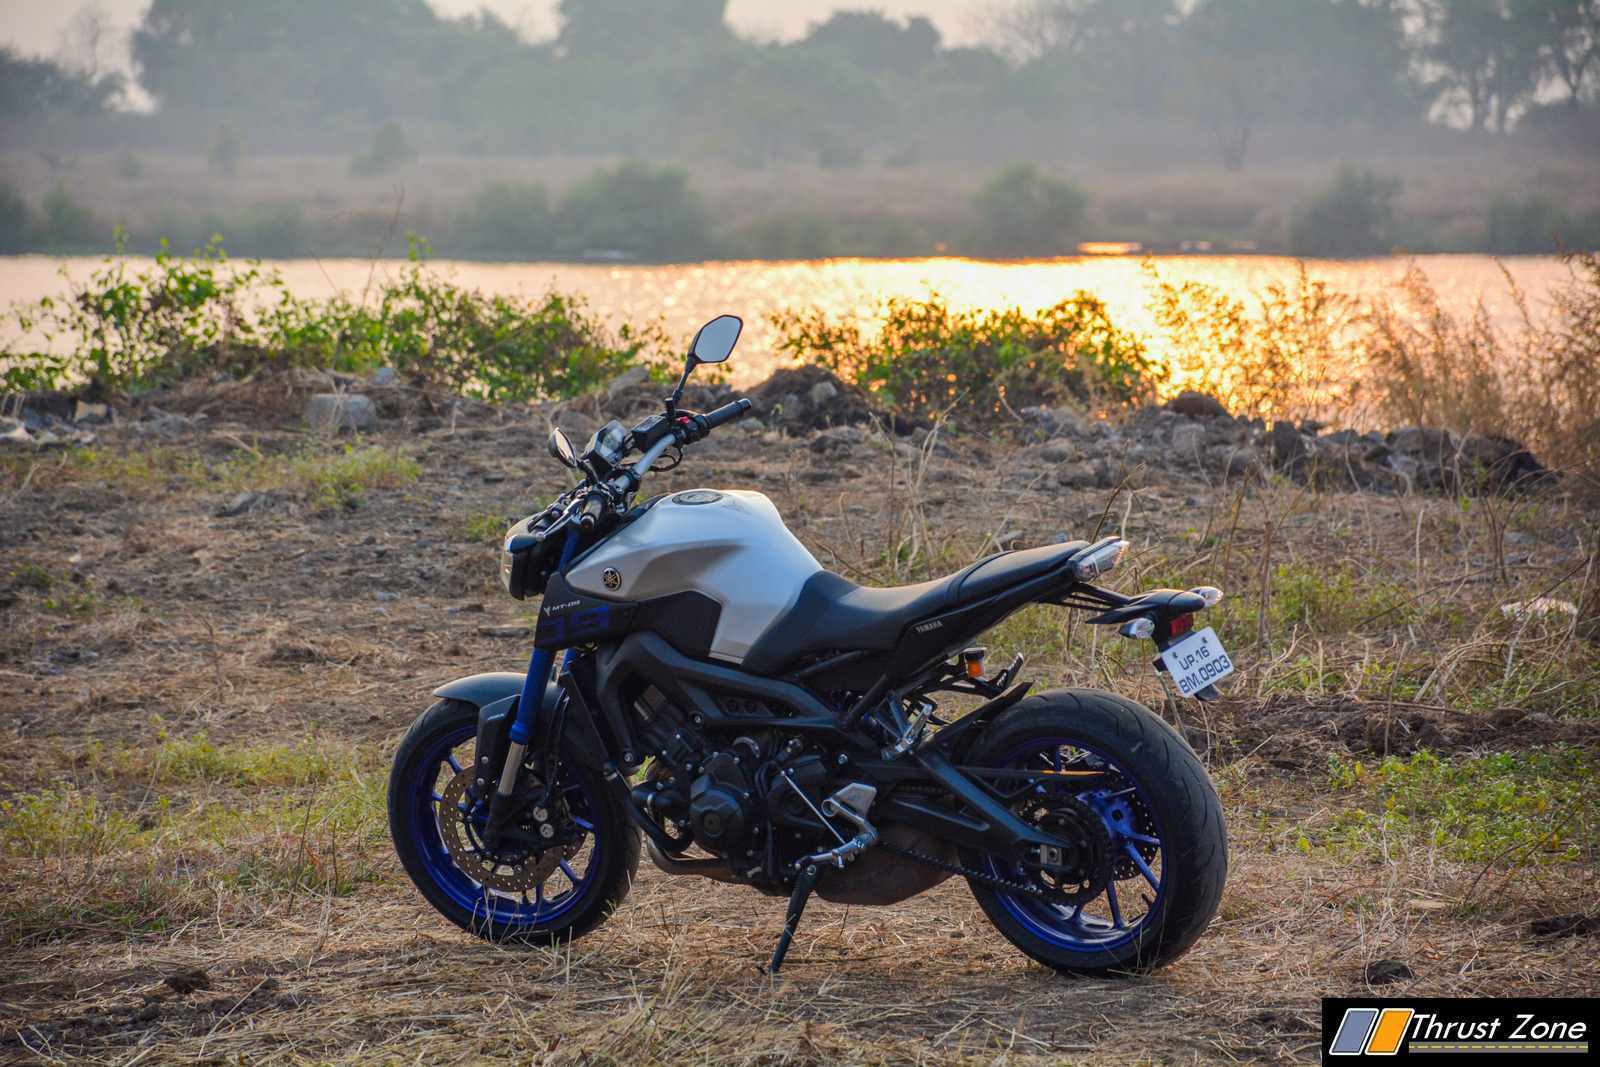 https://www.thrustzone.com/wp-content/uploads/2017/11/Yamaha-MT-09-India-Ride-Review-26.jpg